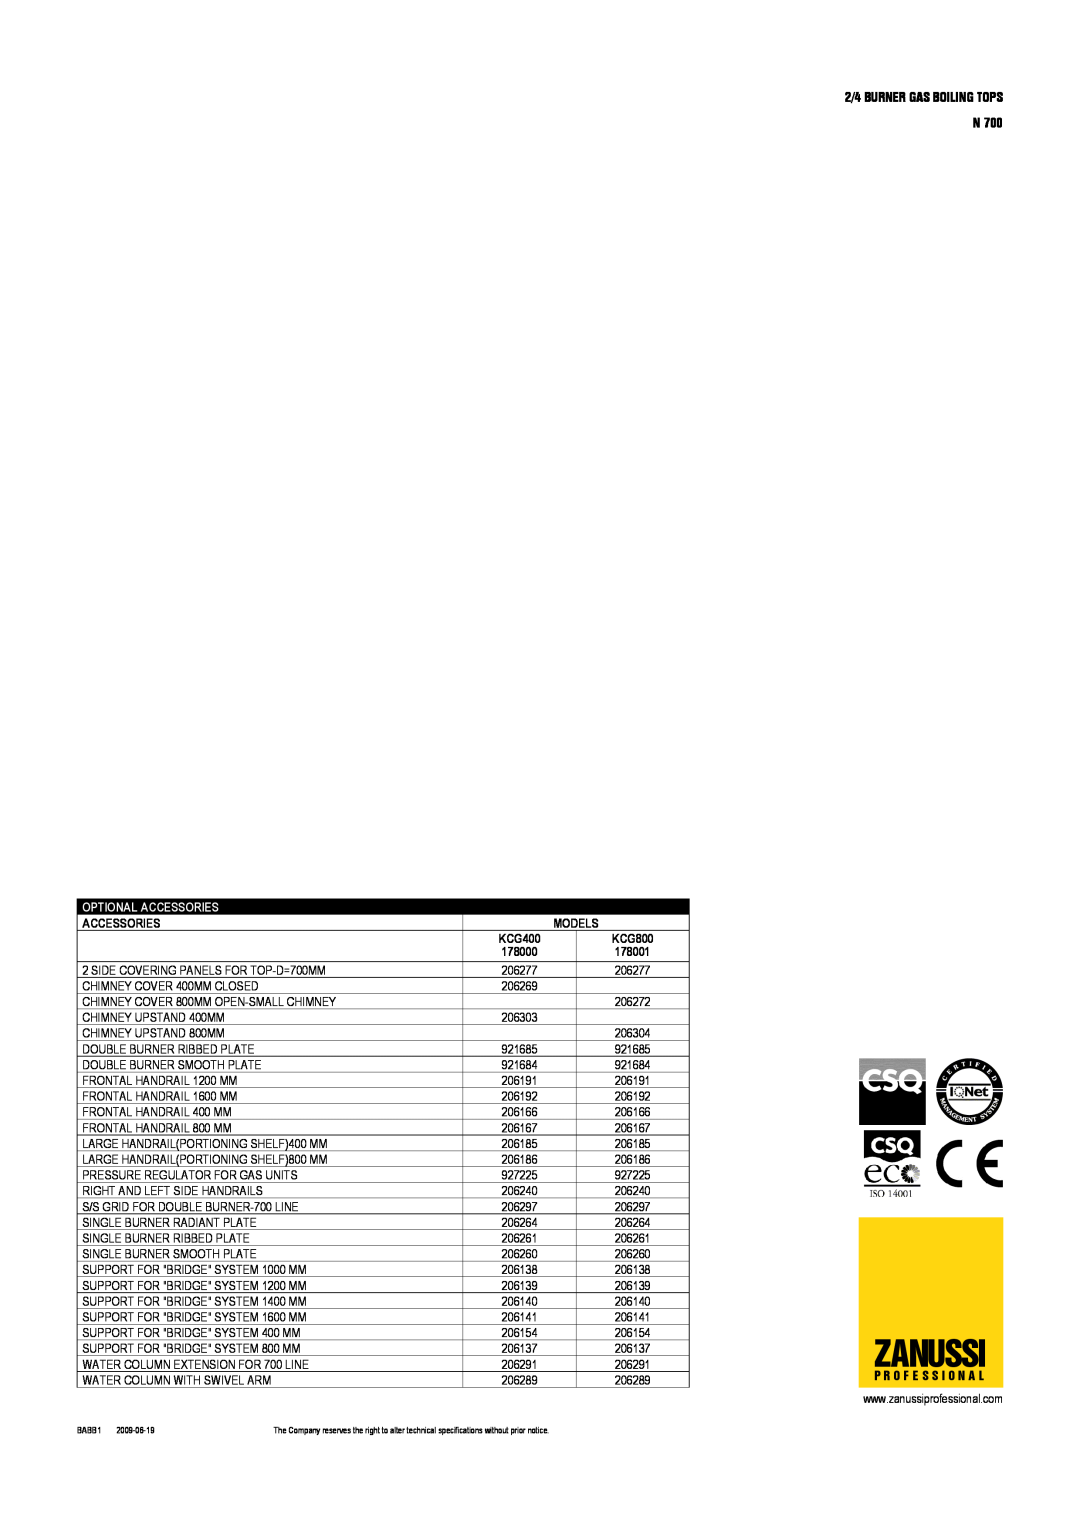 Electrolux 178000, KCG800, KCG400, 178001, N 700 dimensions Zanussi, Optional Accessories, Models 